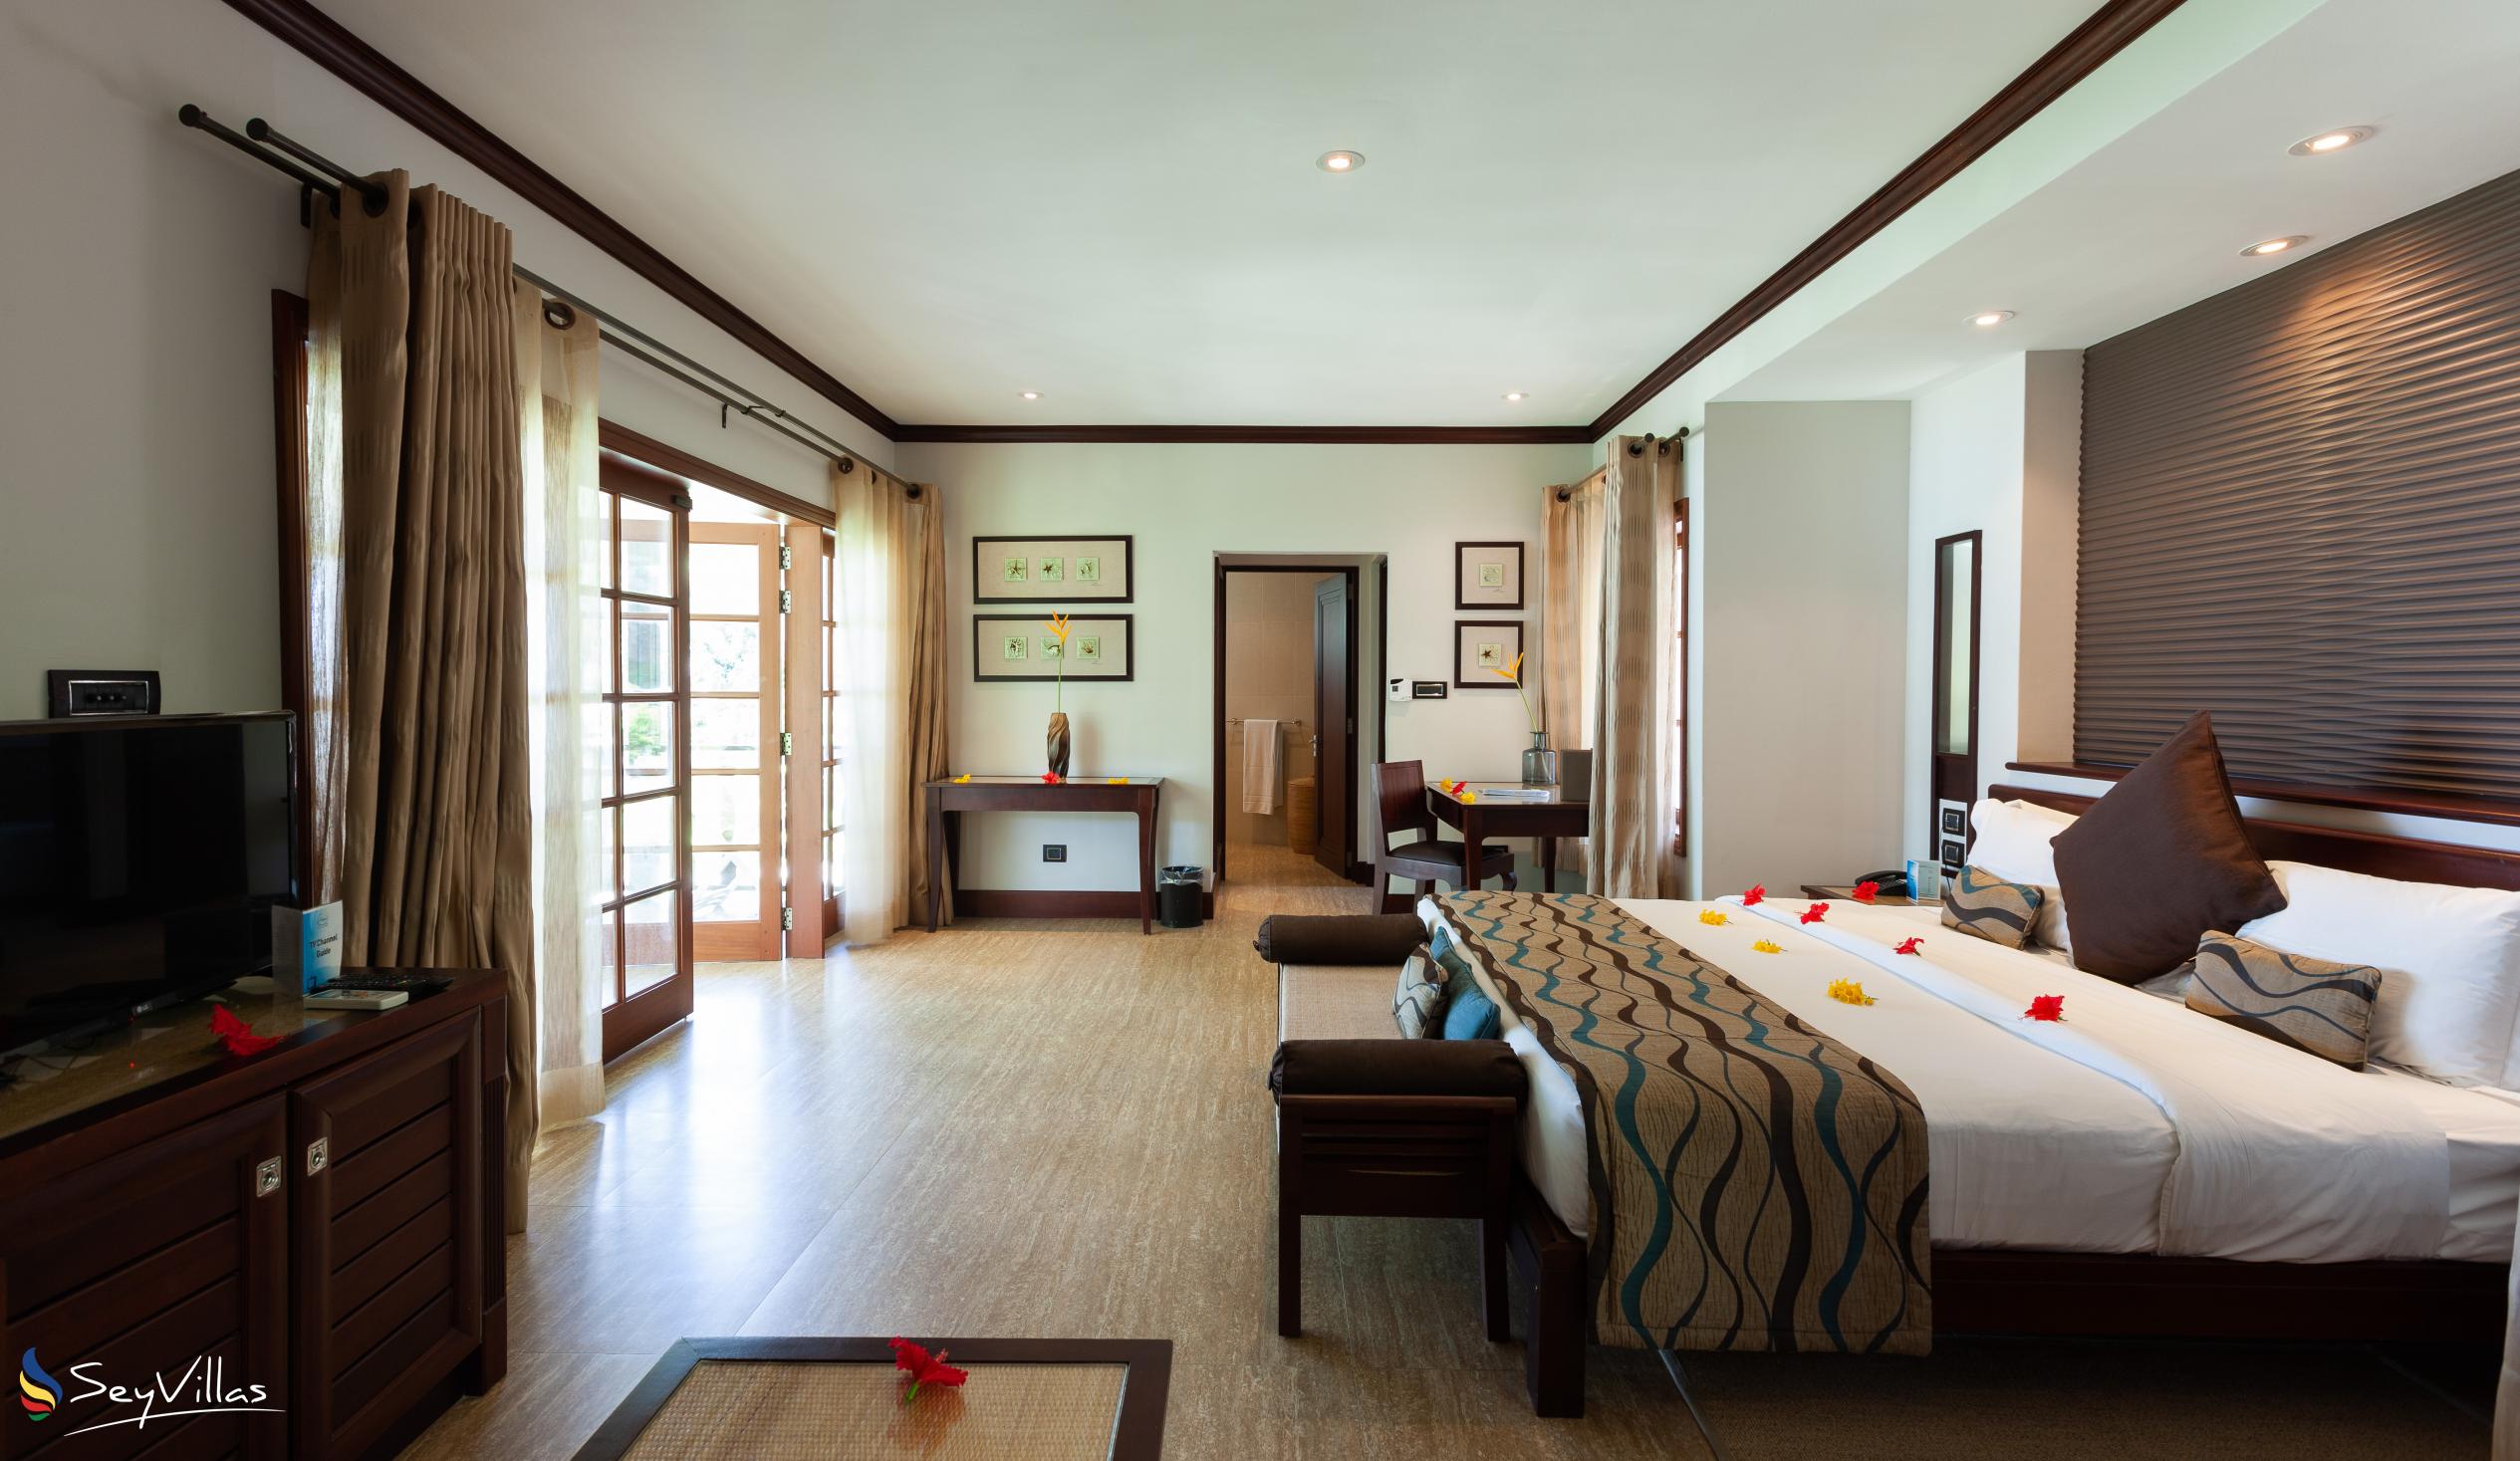 Photo 146: Hotel L'Archipel - Deluxe Room - Praslin (Seychelles)